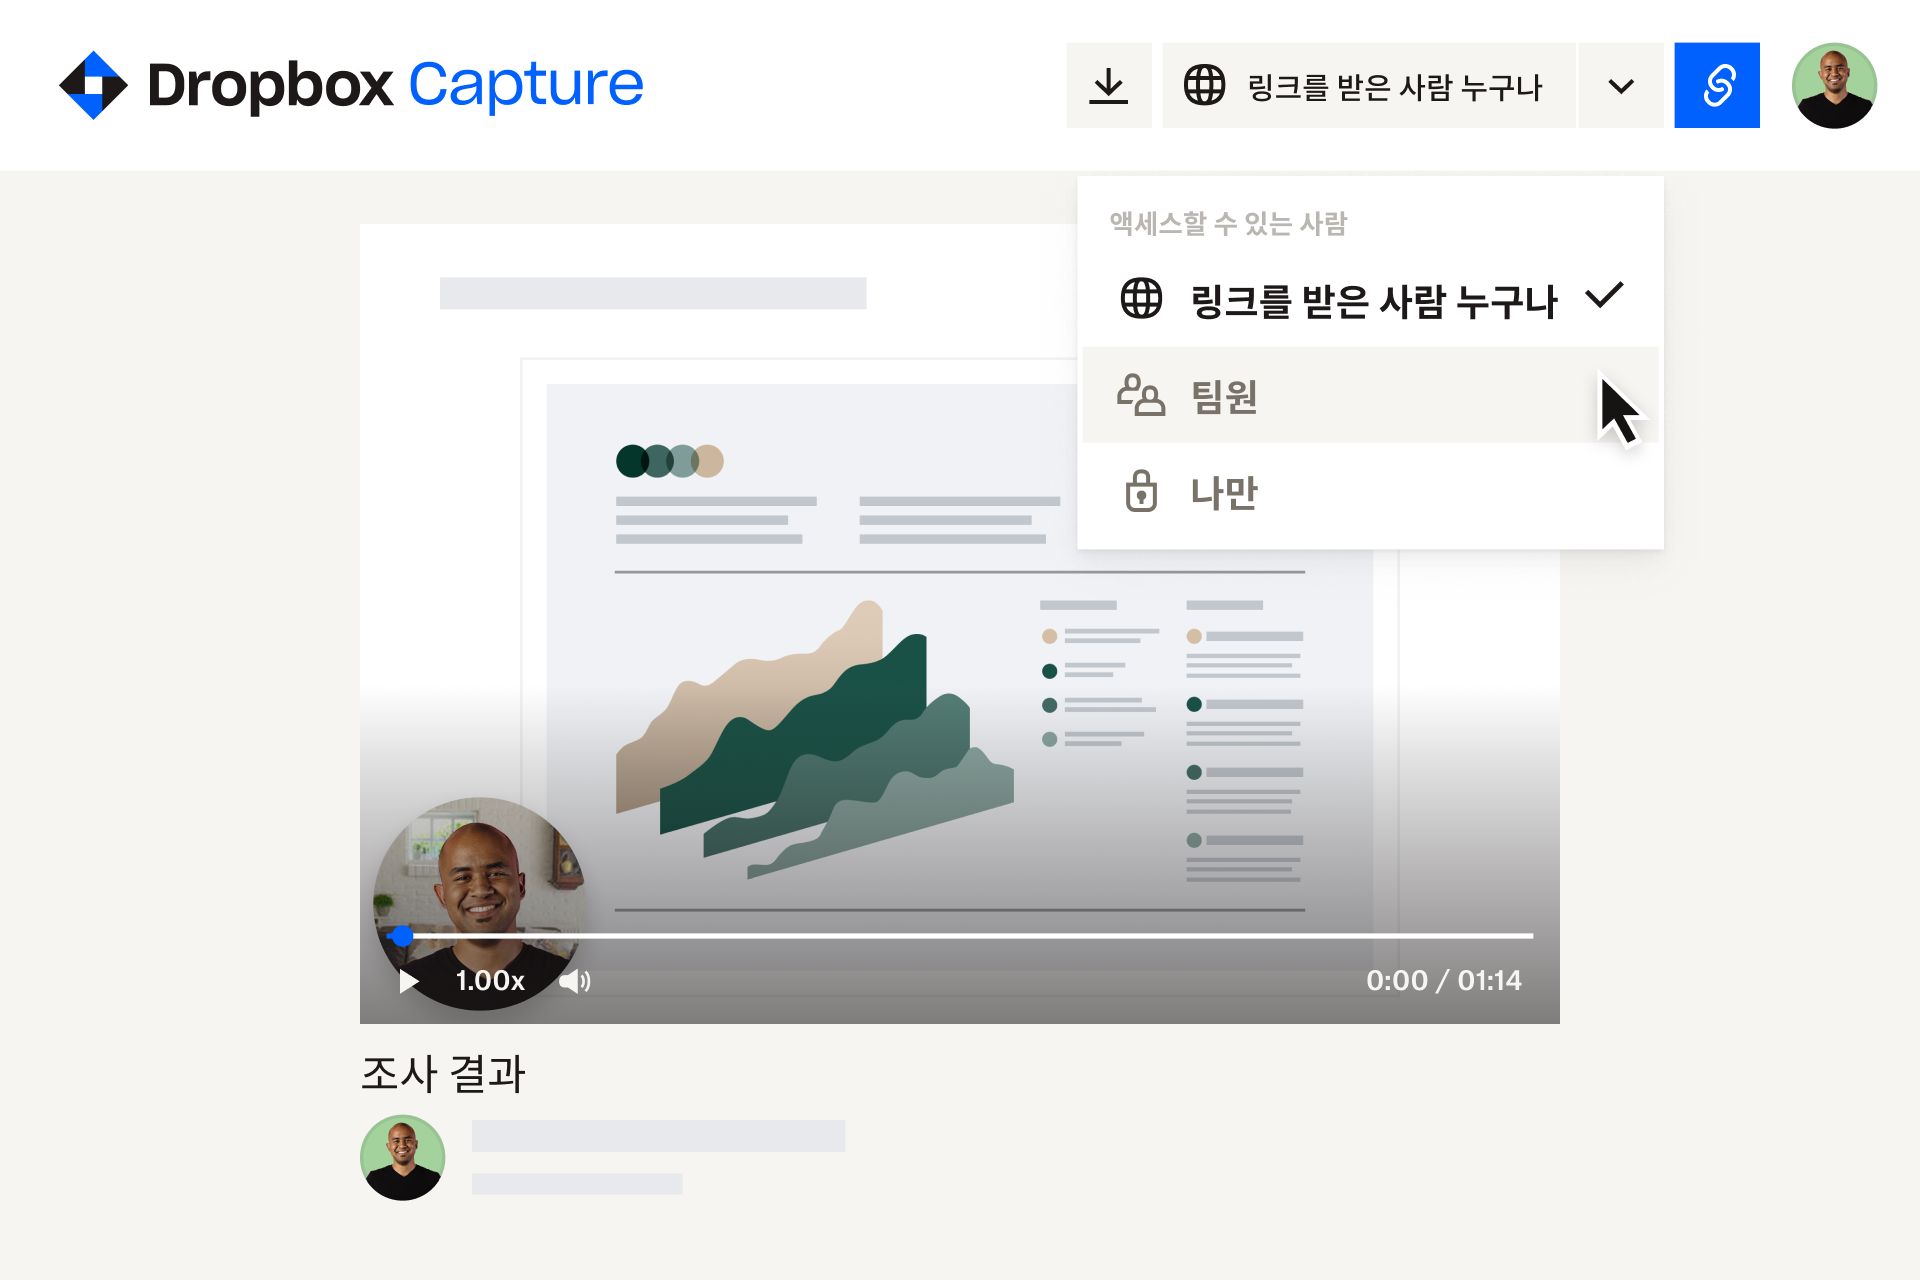 Dropbox Capture 동영상 드롭다운의 '액세스할 수 있는 사람' 메뉴에서 '팀원' 옵션을 선택하는 사용자